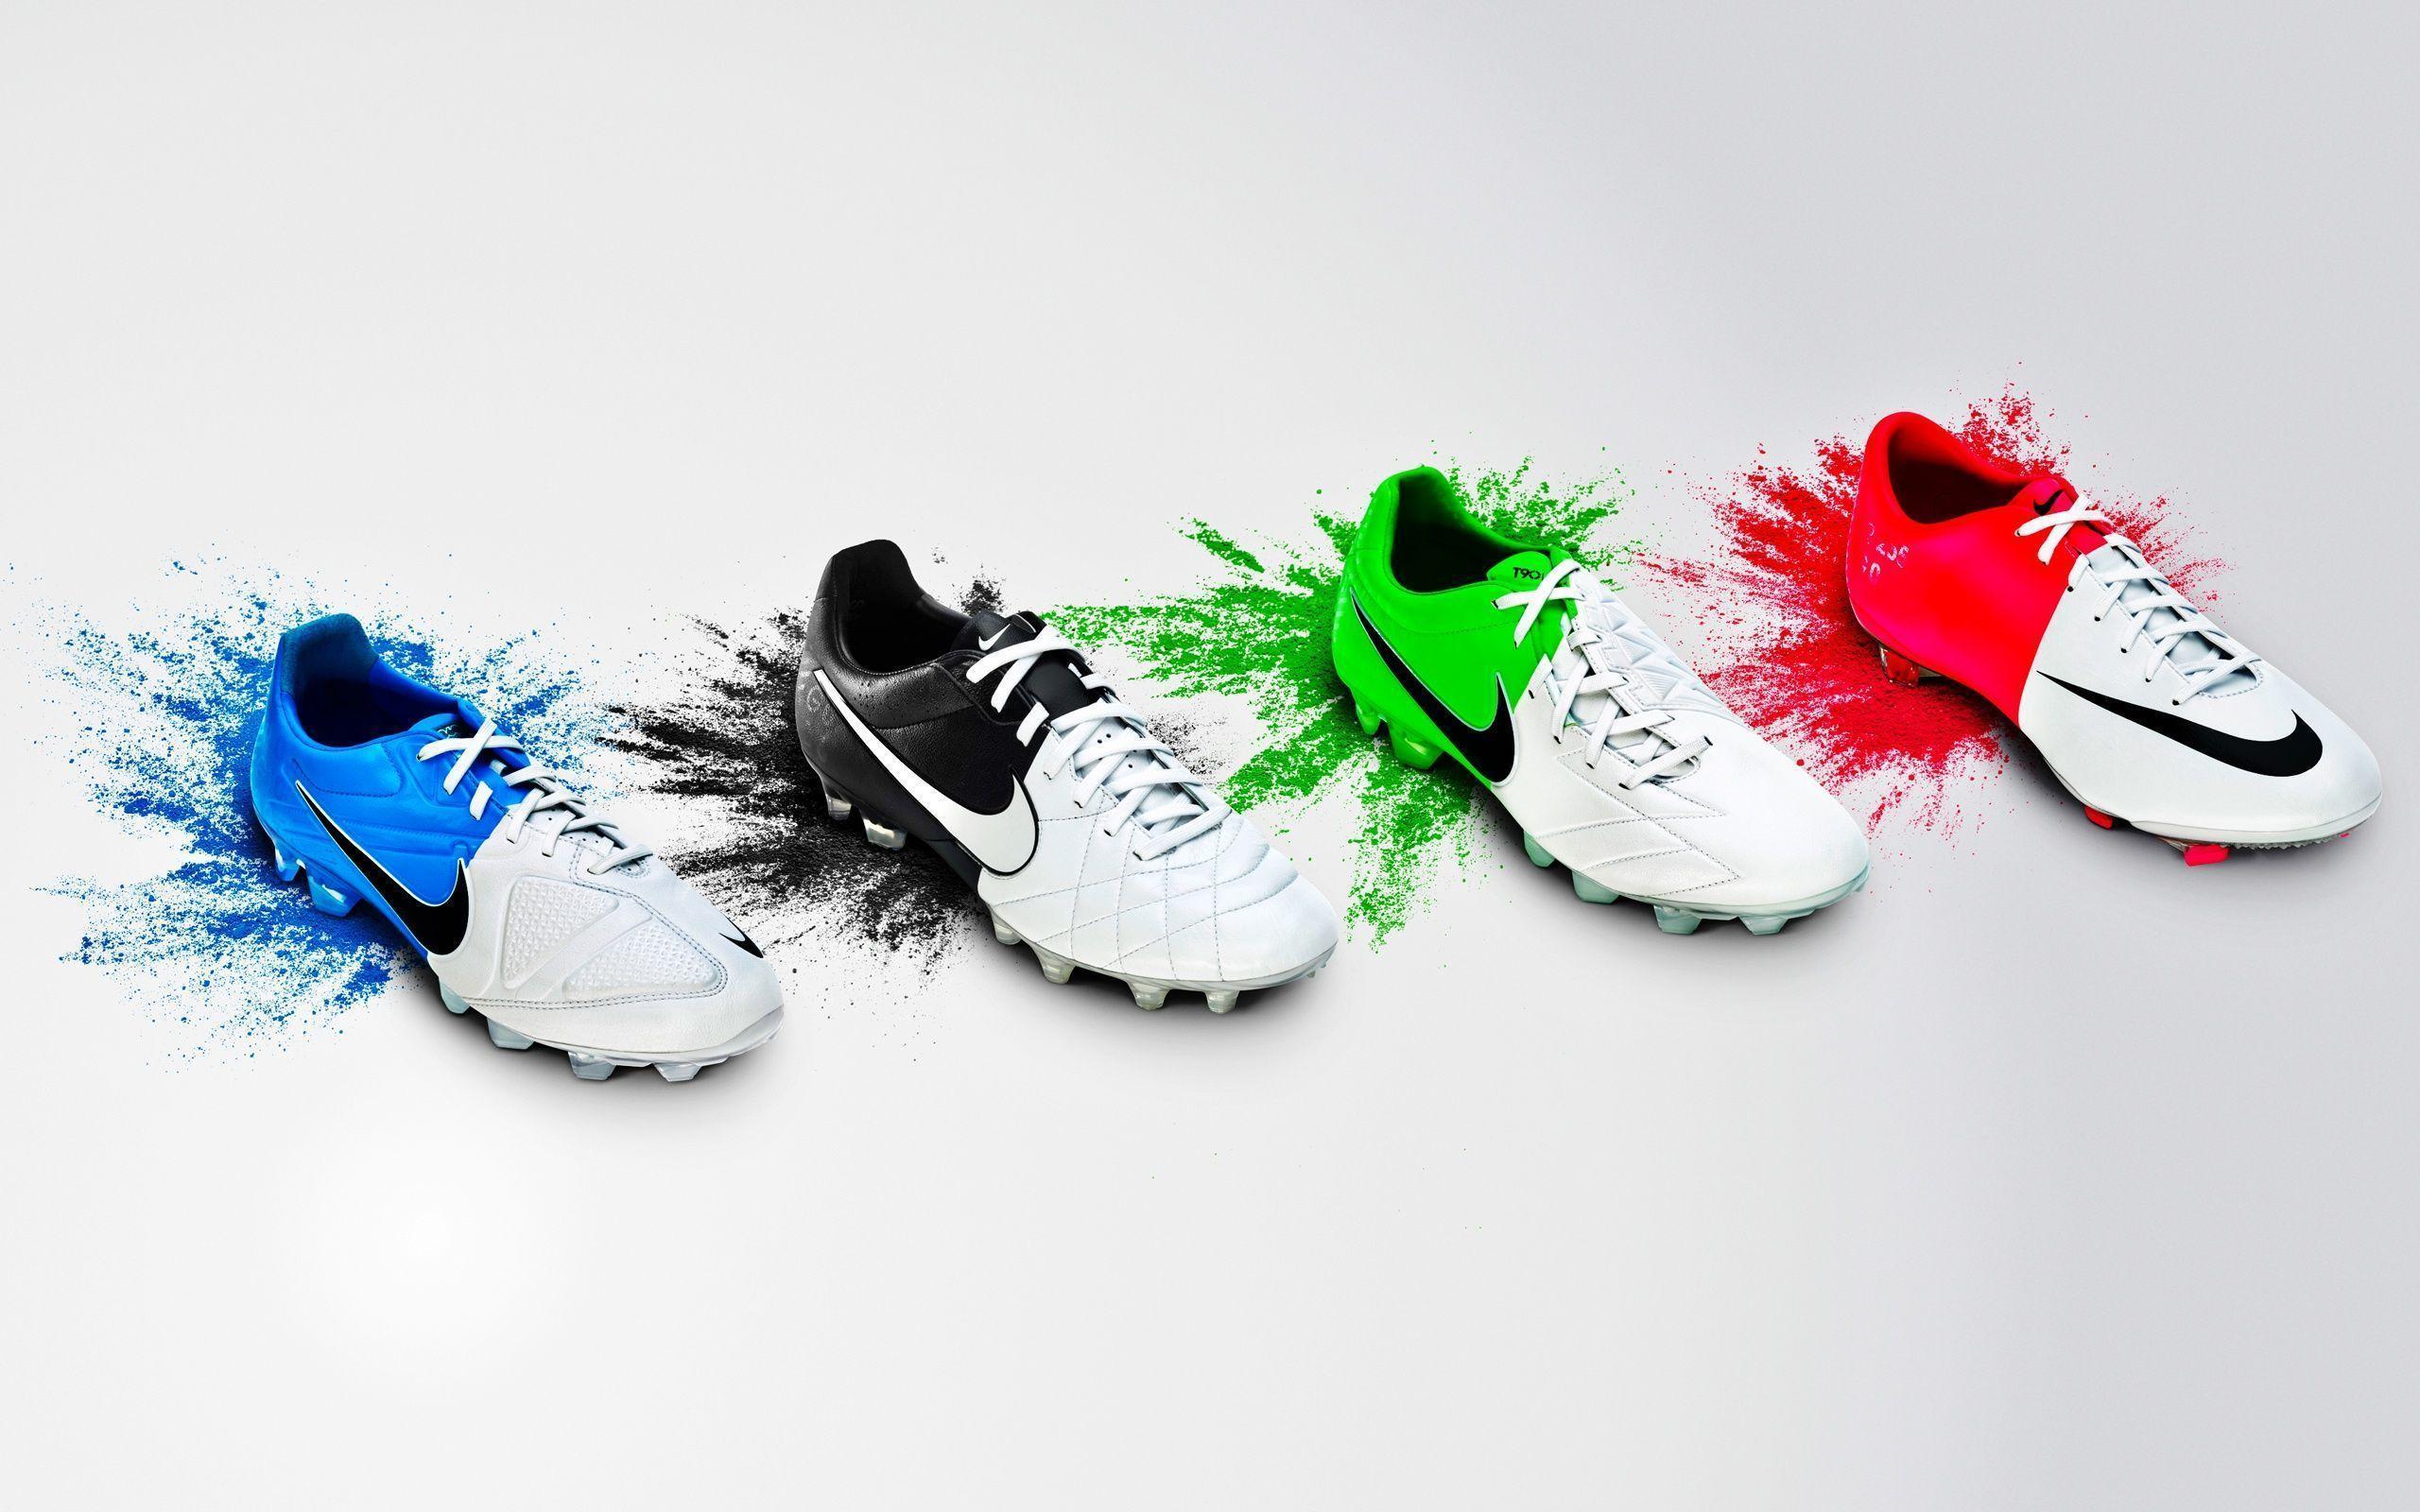 Nike Running Shoes Wallpaper Desktop Download 2560x1600PX